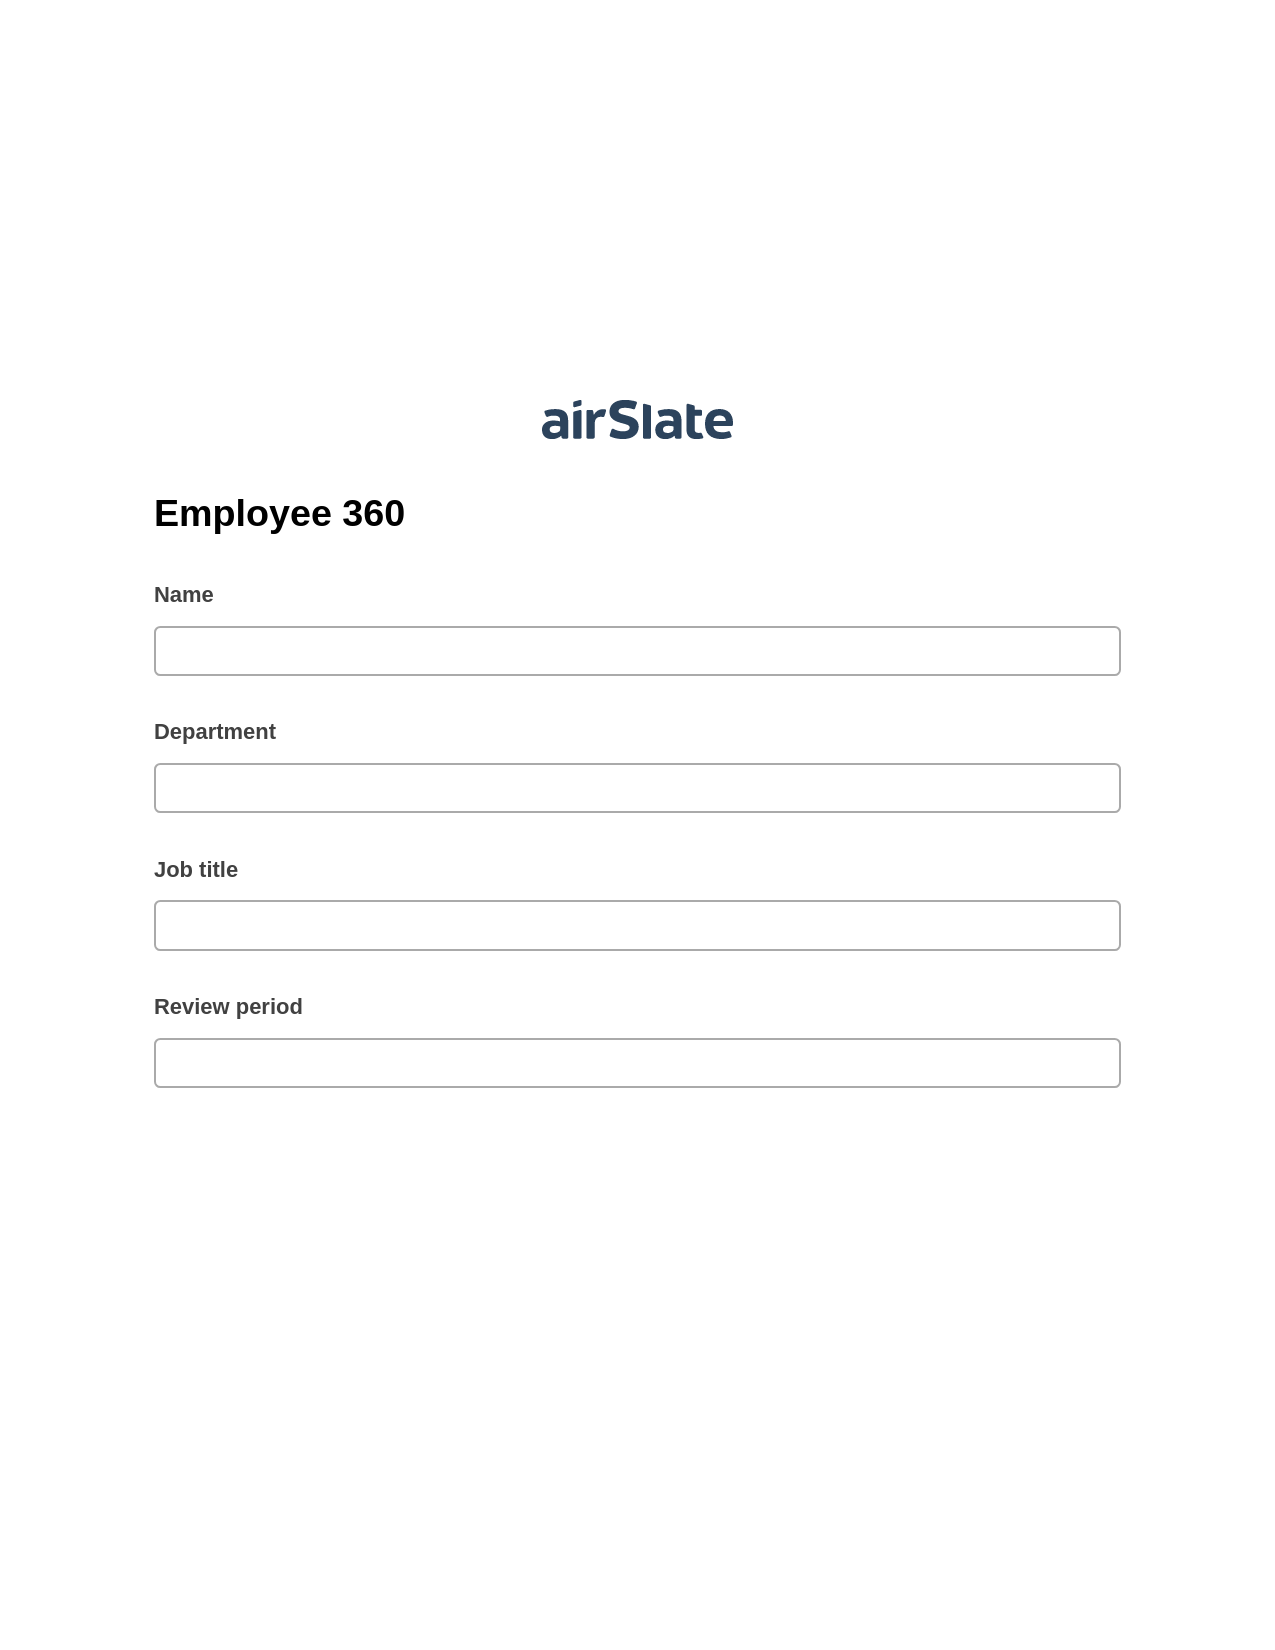 Multirole Employee 360 Pre-fill from Excel Spreadsheet Bot, Invoke Salesforce Process Bot, Post-finish Document Bot